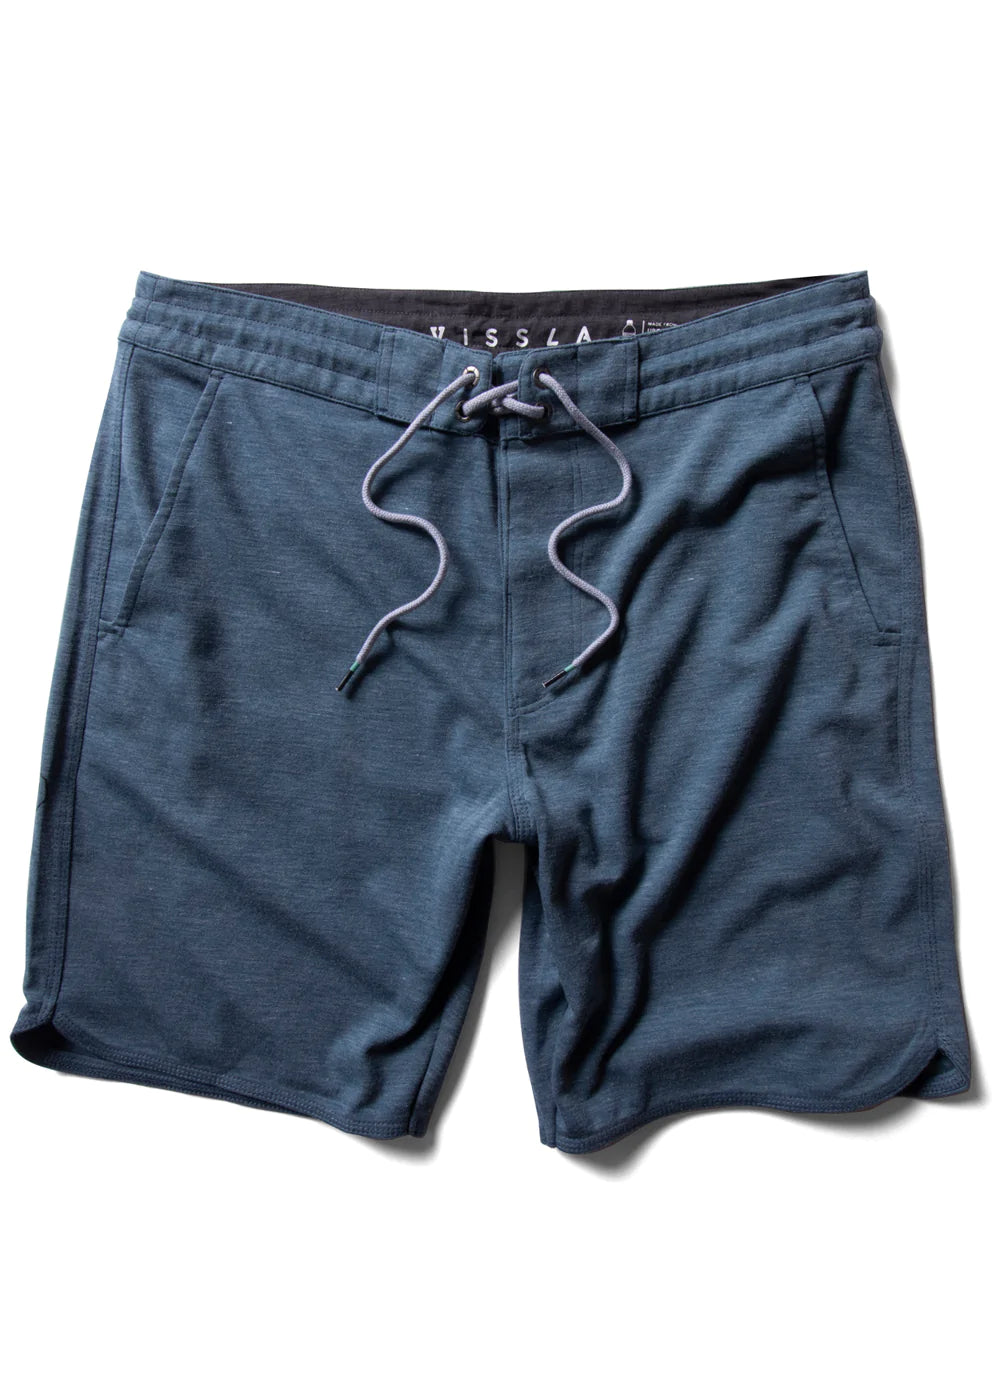 Vissla Eco Locker 18.5" Sofa Surfer Shorts - Harbor Blue Mens Shorts